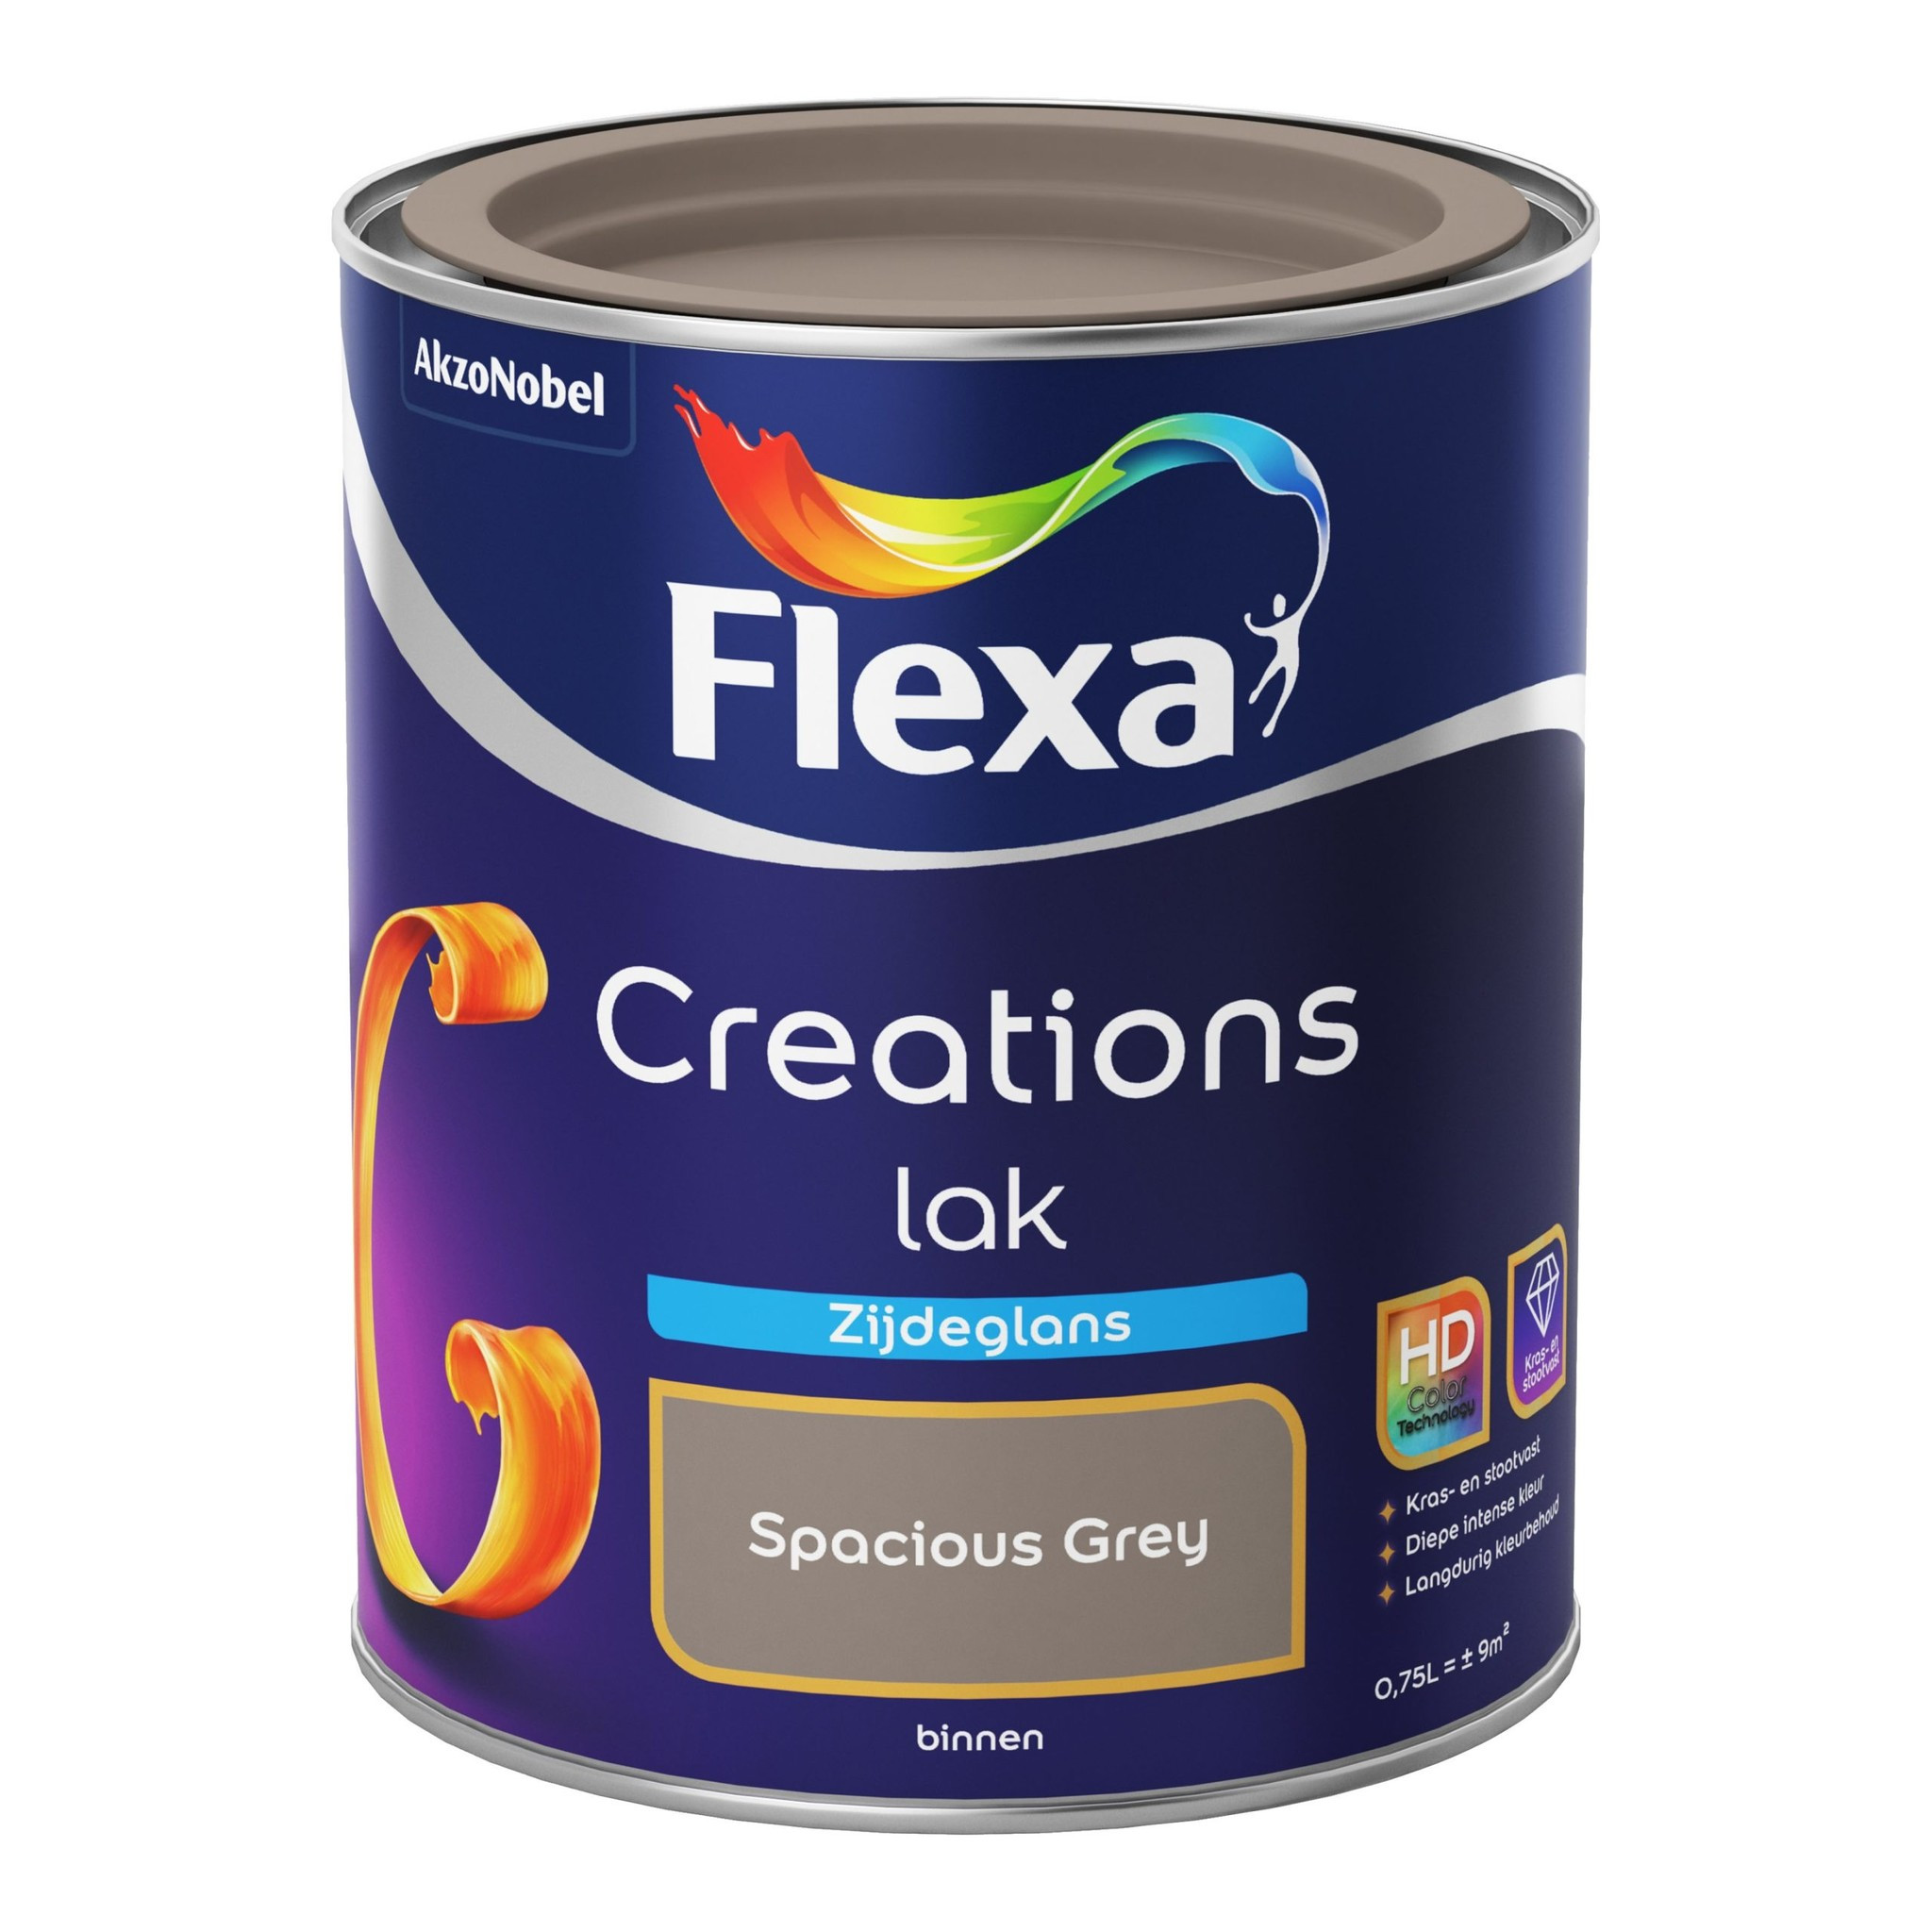 Flexa Creations Lak Zijdeglans - Spacious Grey